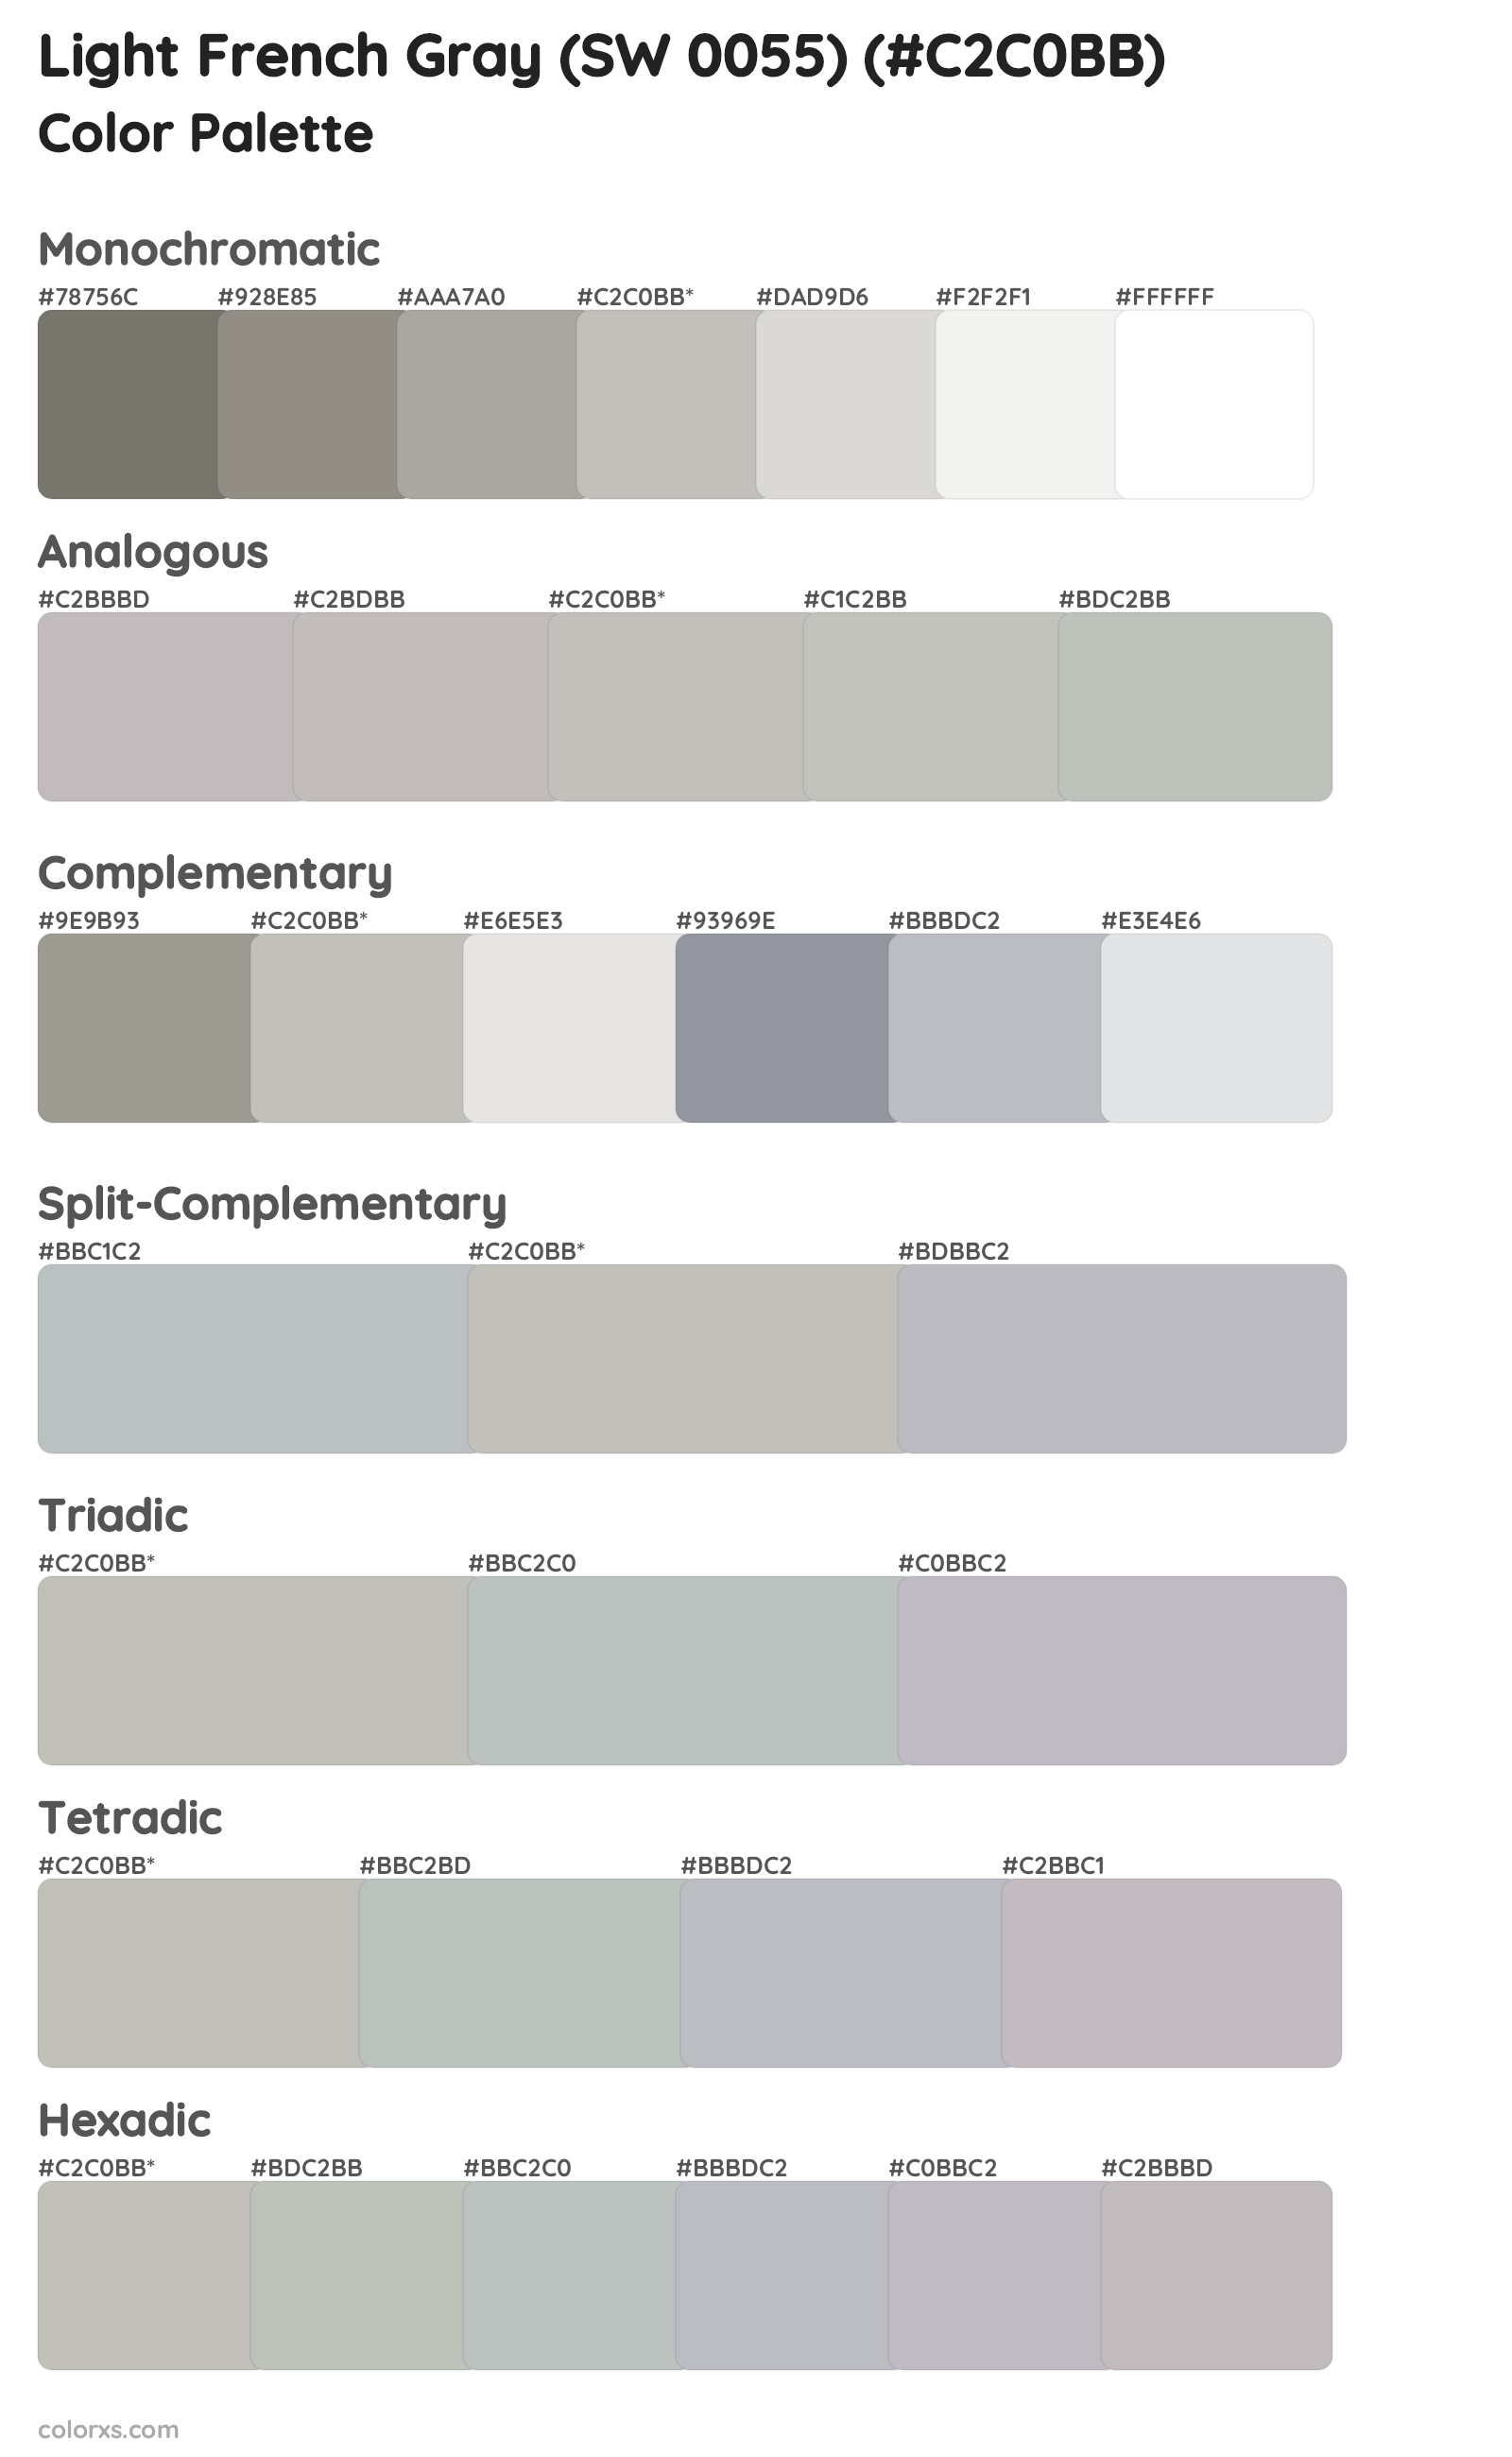 Light French Gray (SW 0055) Color Scheme Palettes